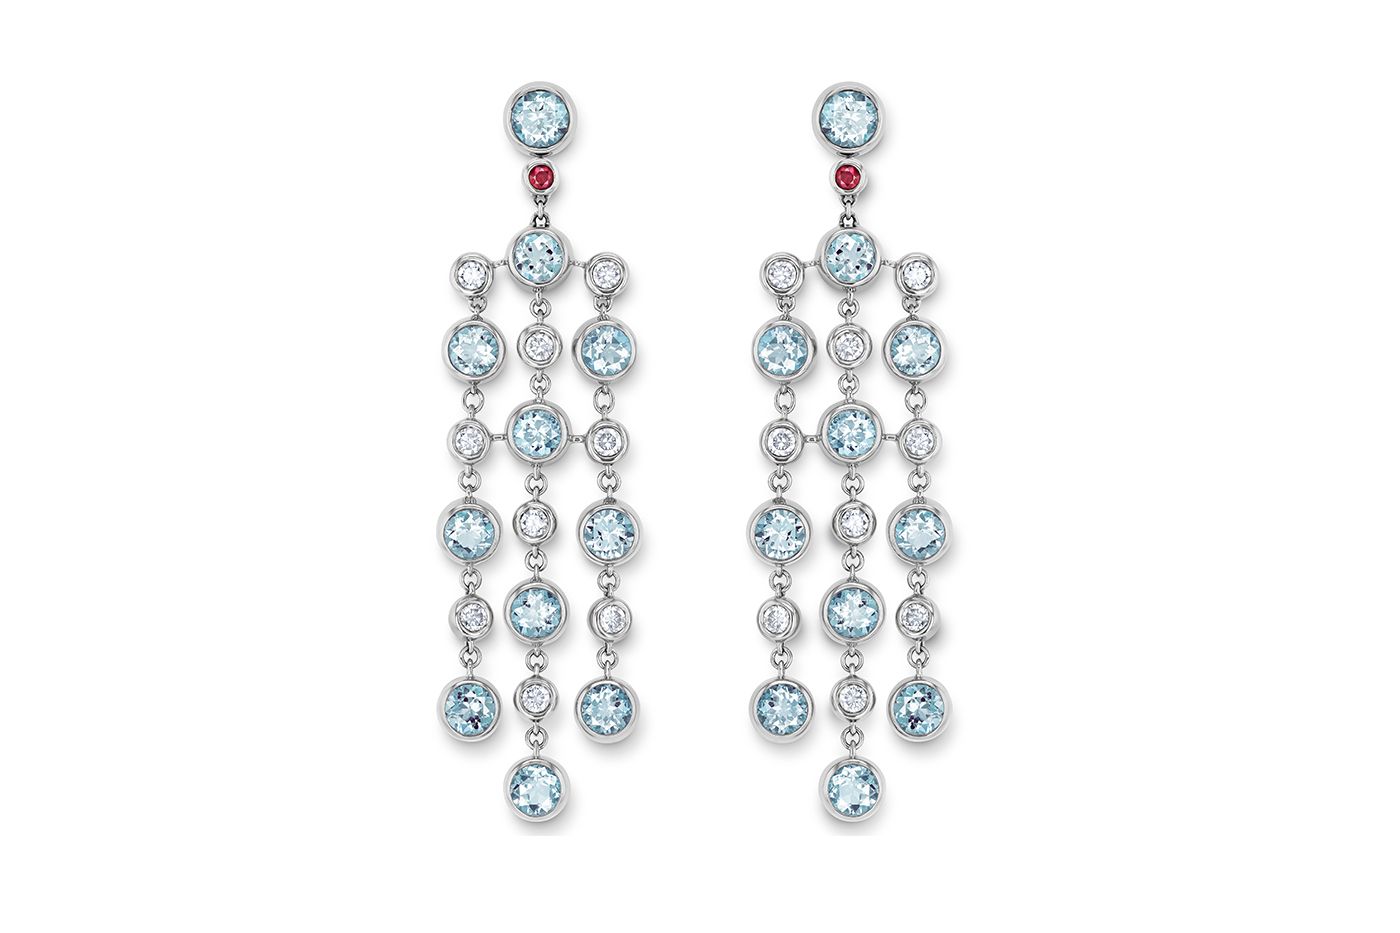 Gübelin Jewellery Sparks of Fire Chandelier earrings in white gold, aquamarine and diamond